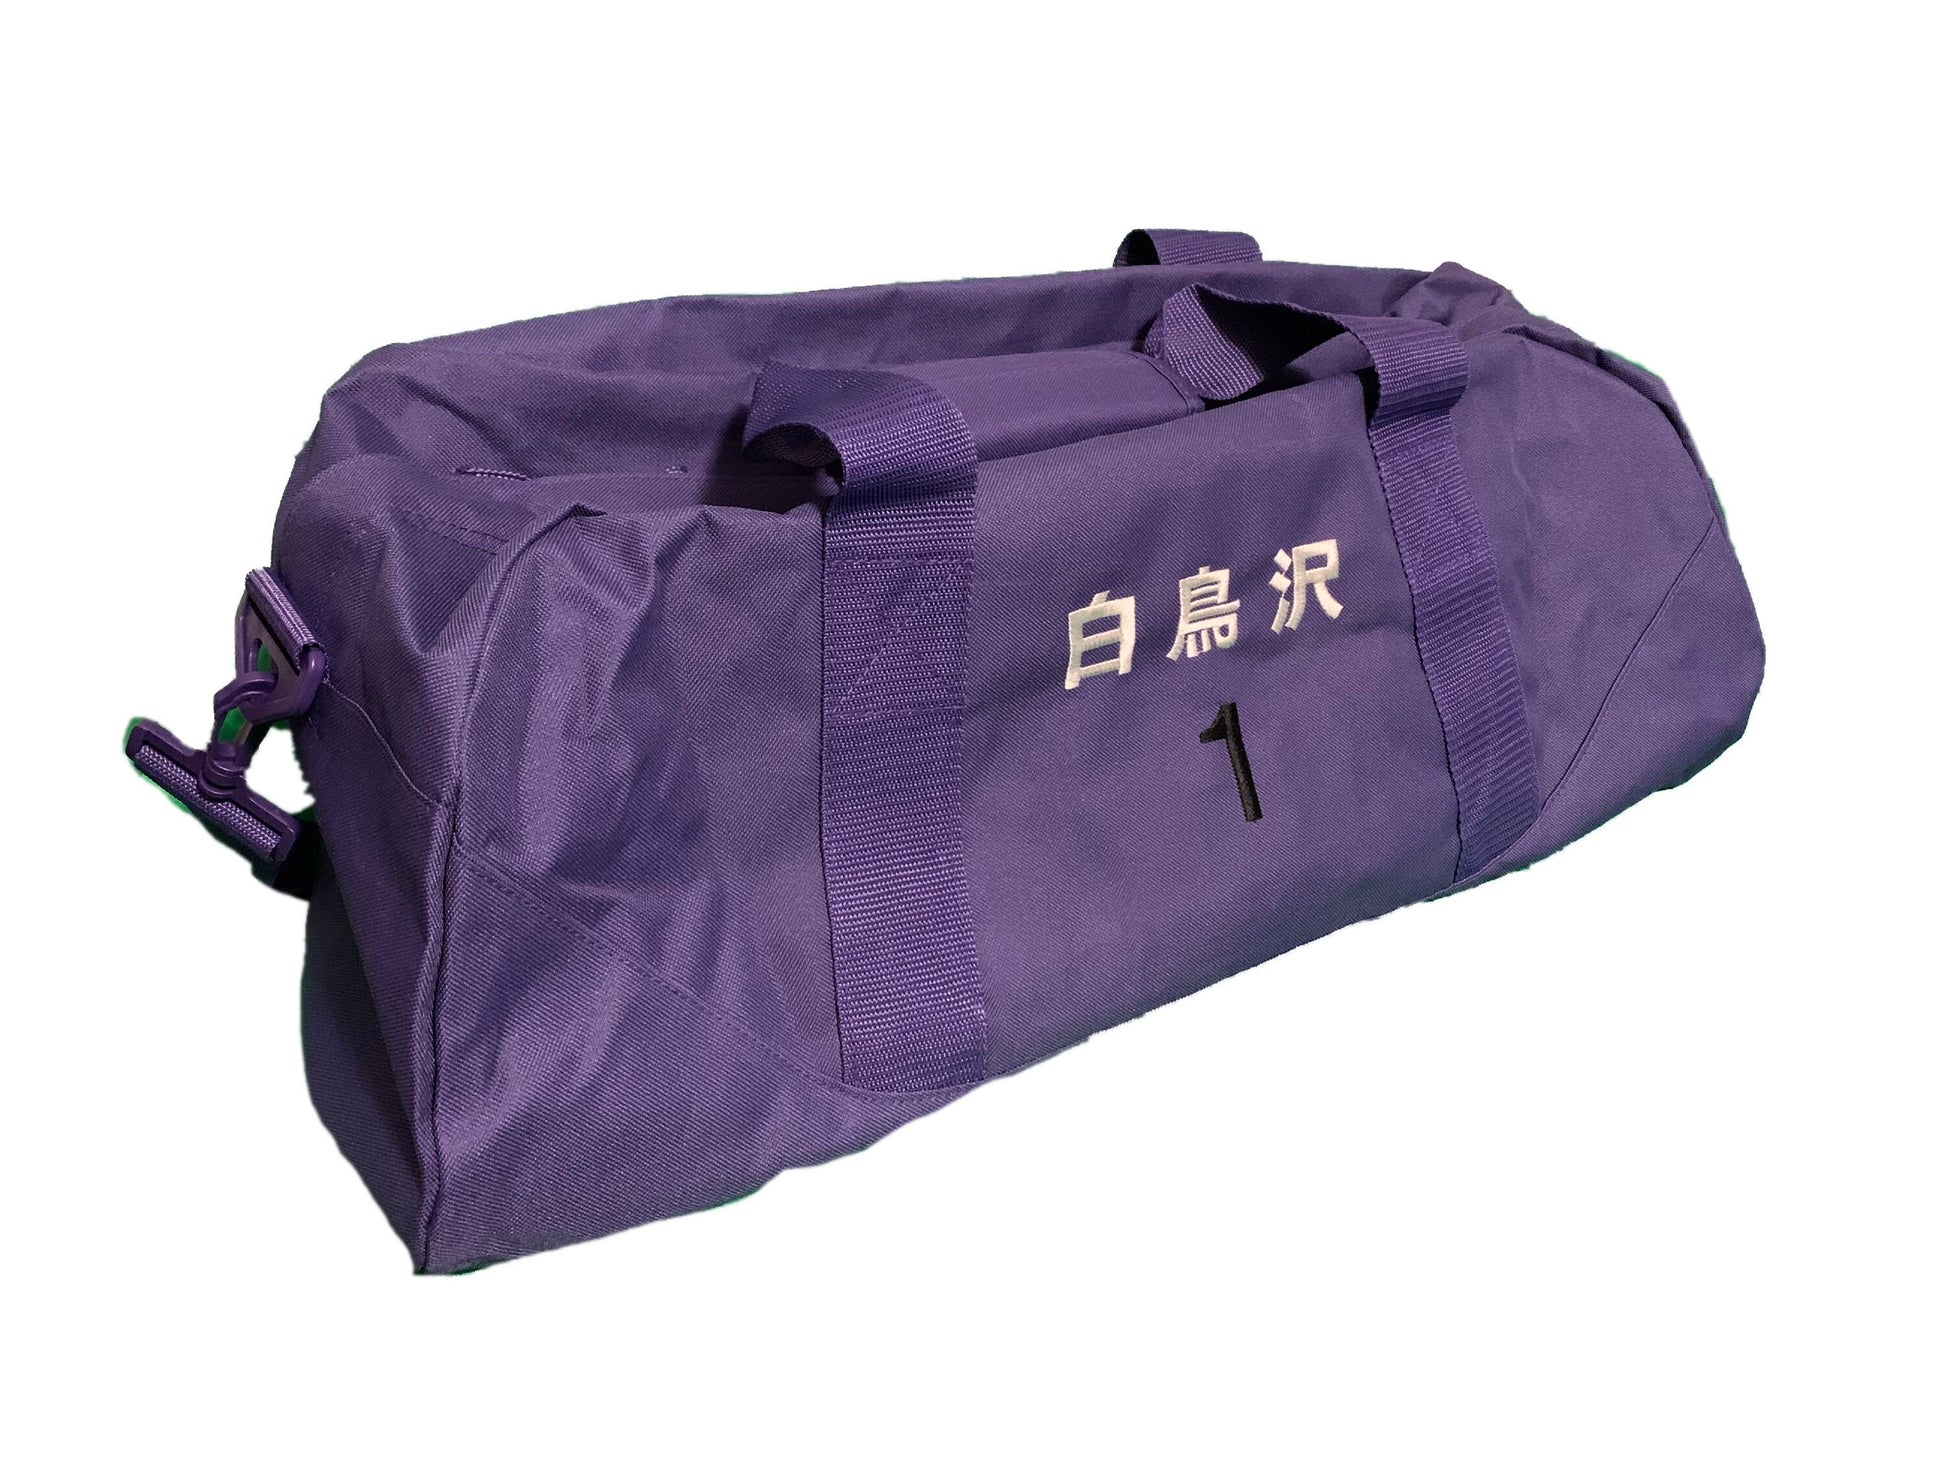 Ushijima Wakatoshi Shiratorizawa Luggage Backpack Gym Bag Duffel Ushiwaka Tendou Satori